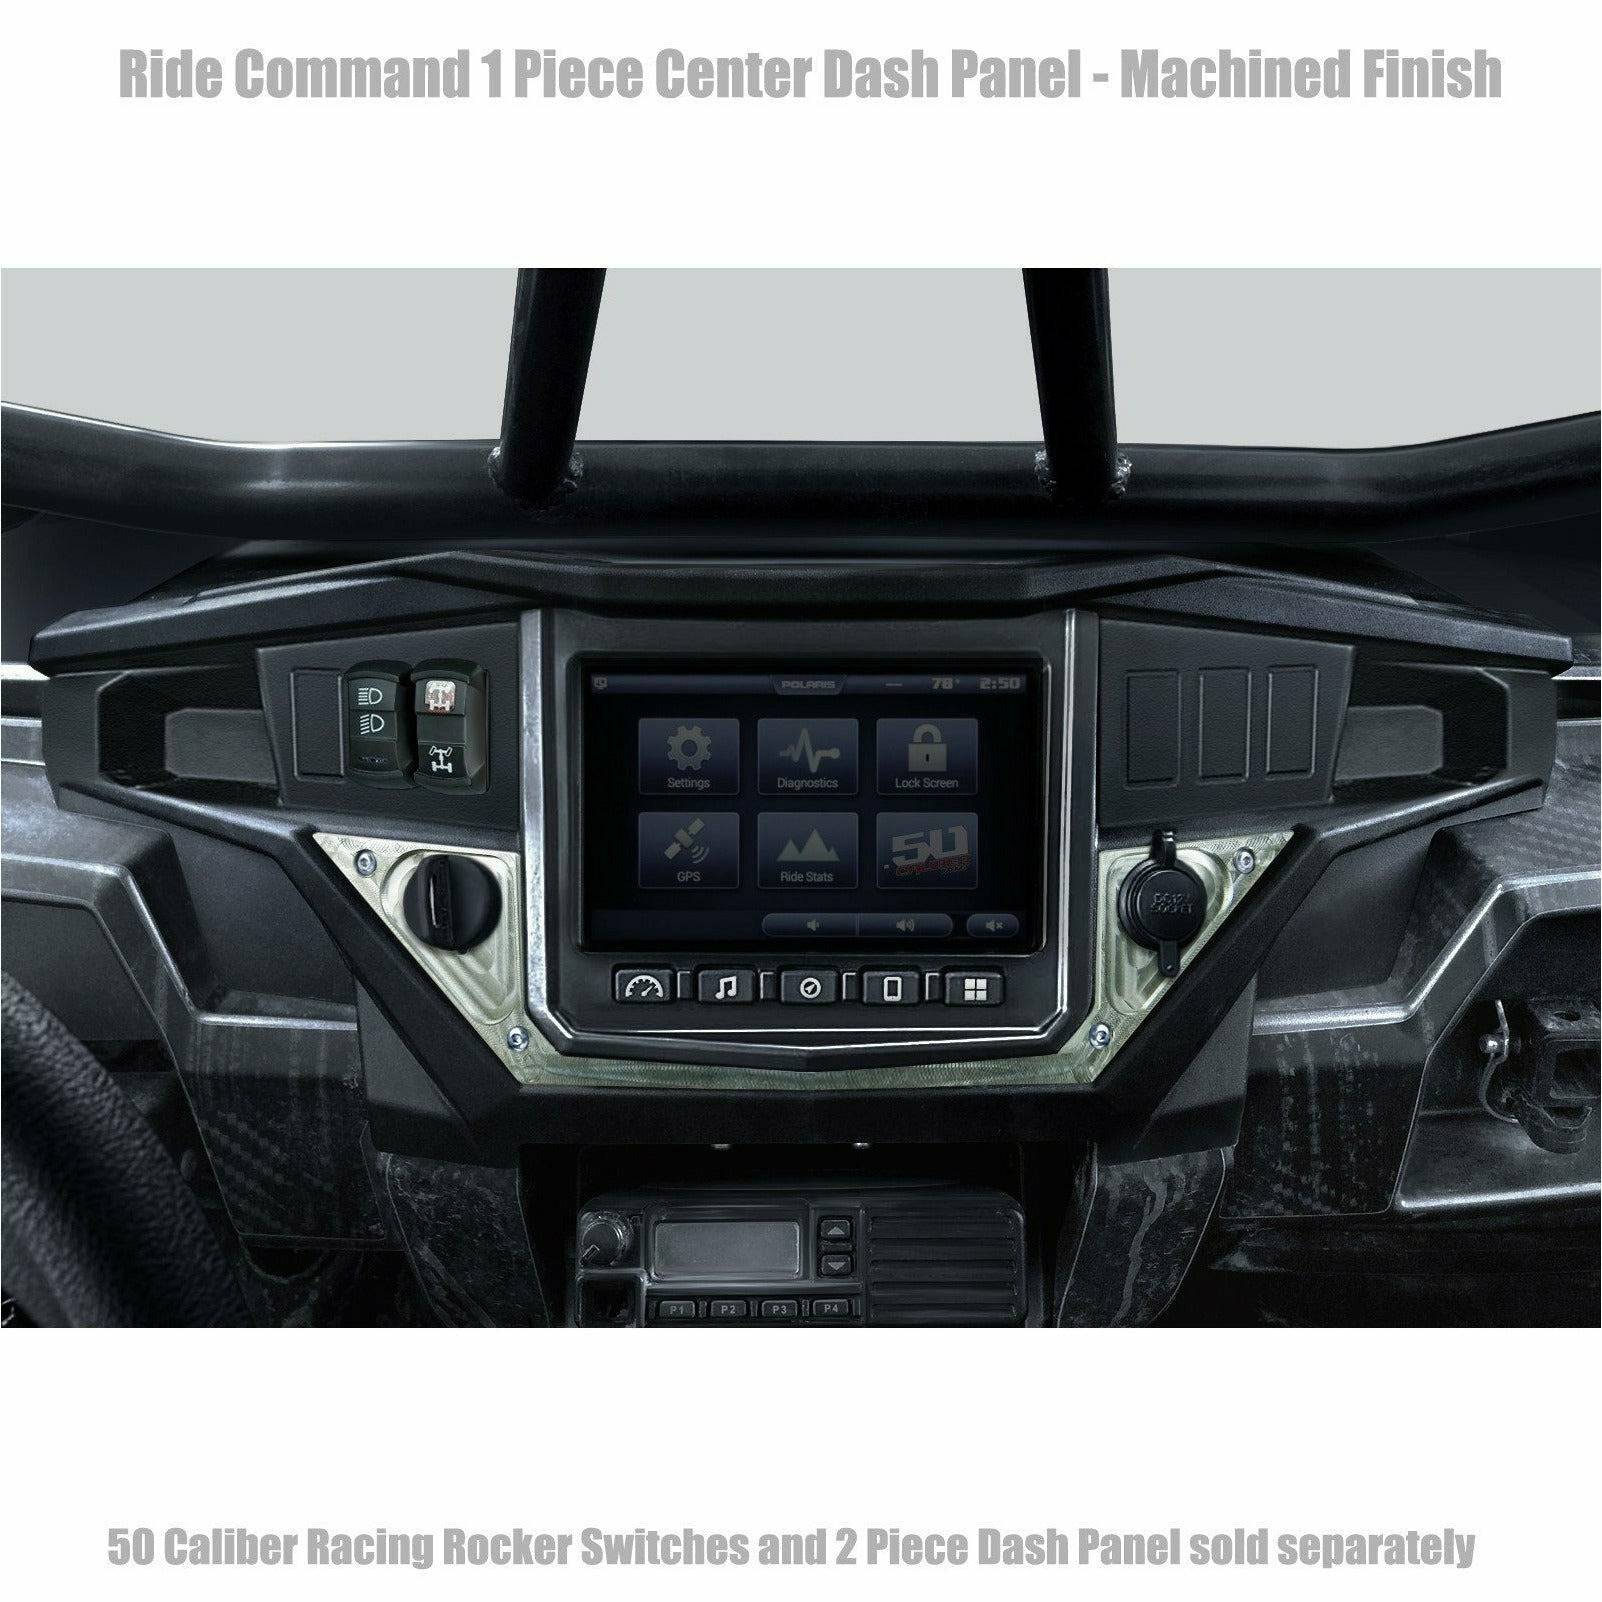 Polaris RZR XP 1000 Ride Command 1 Piece Dash Panel